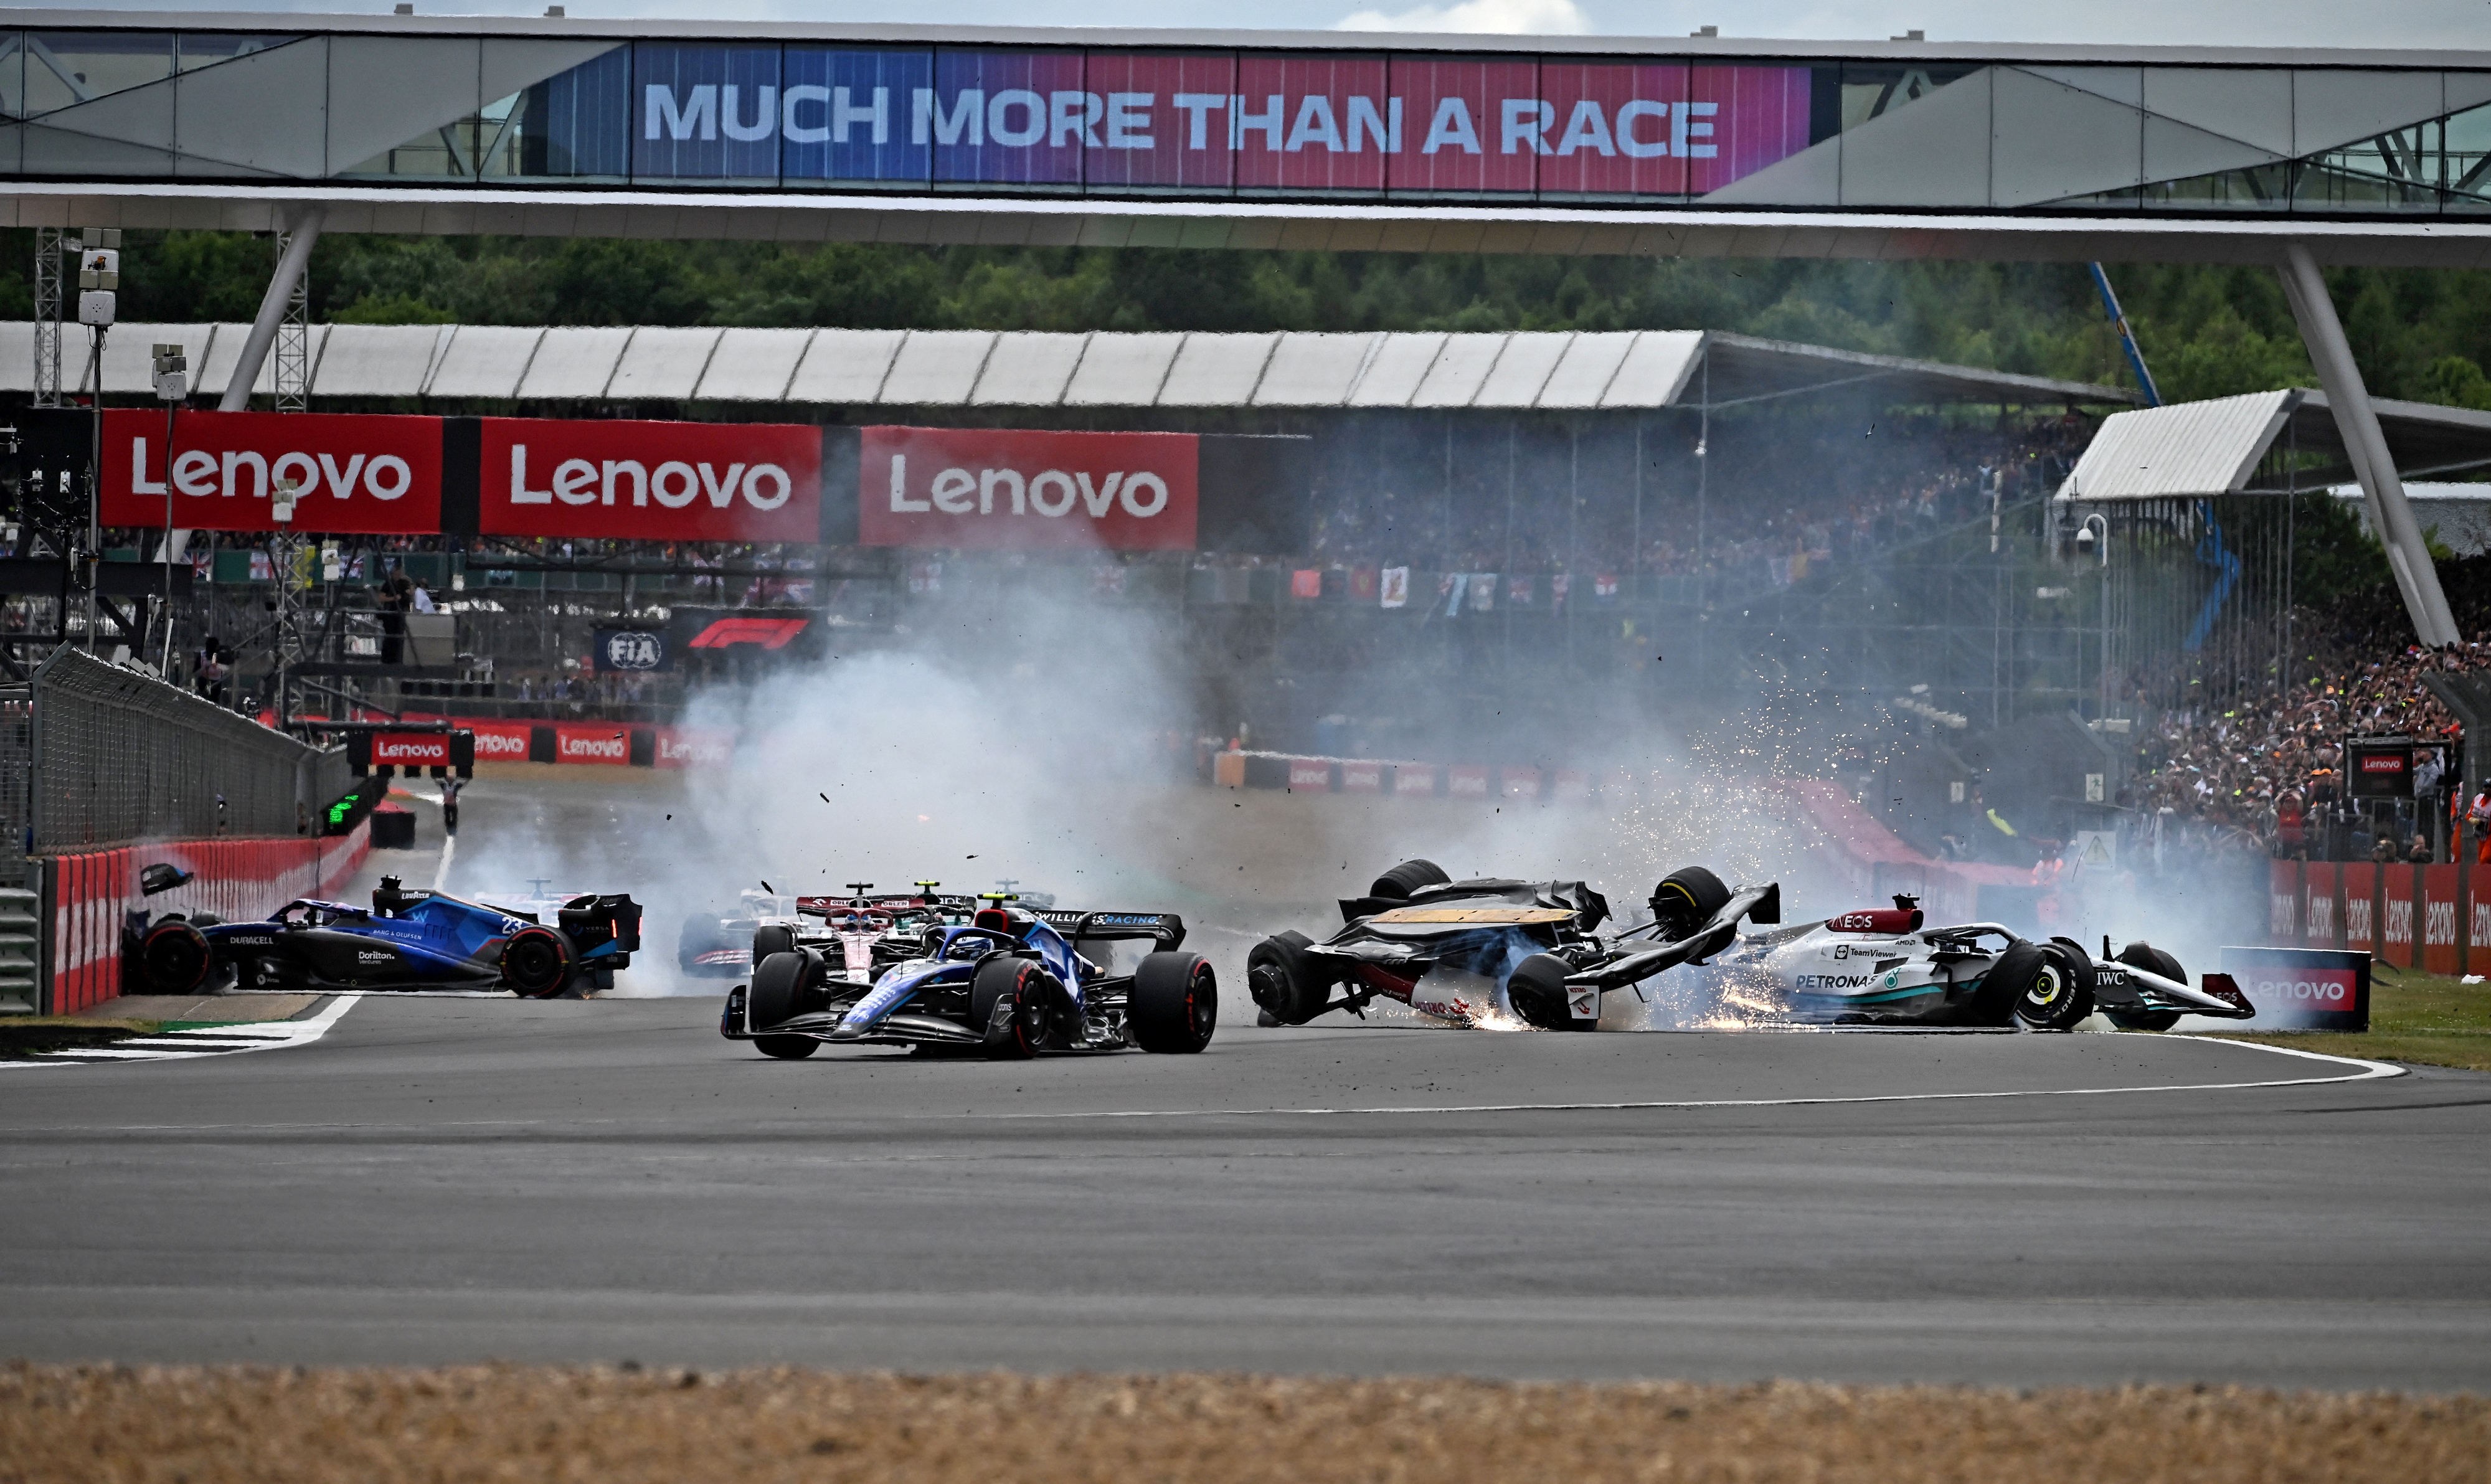 Crash at start of 2022 British GP